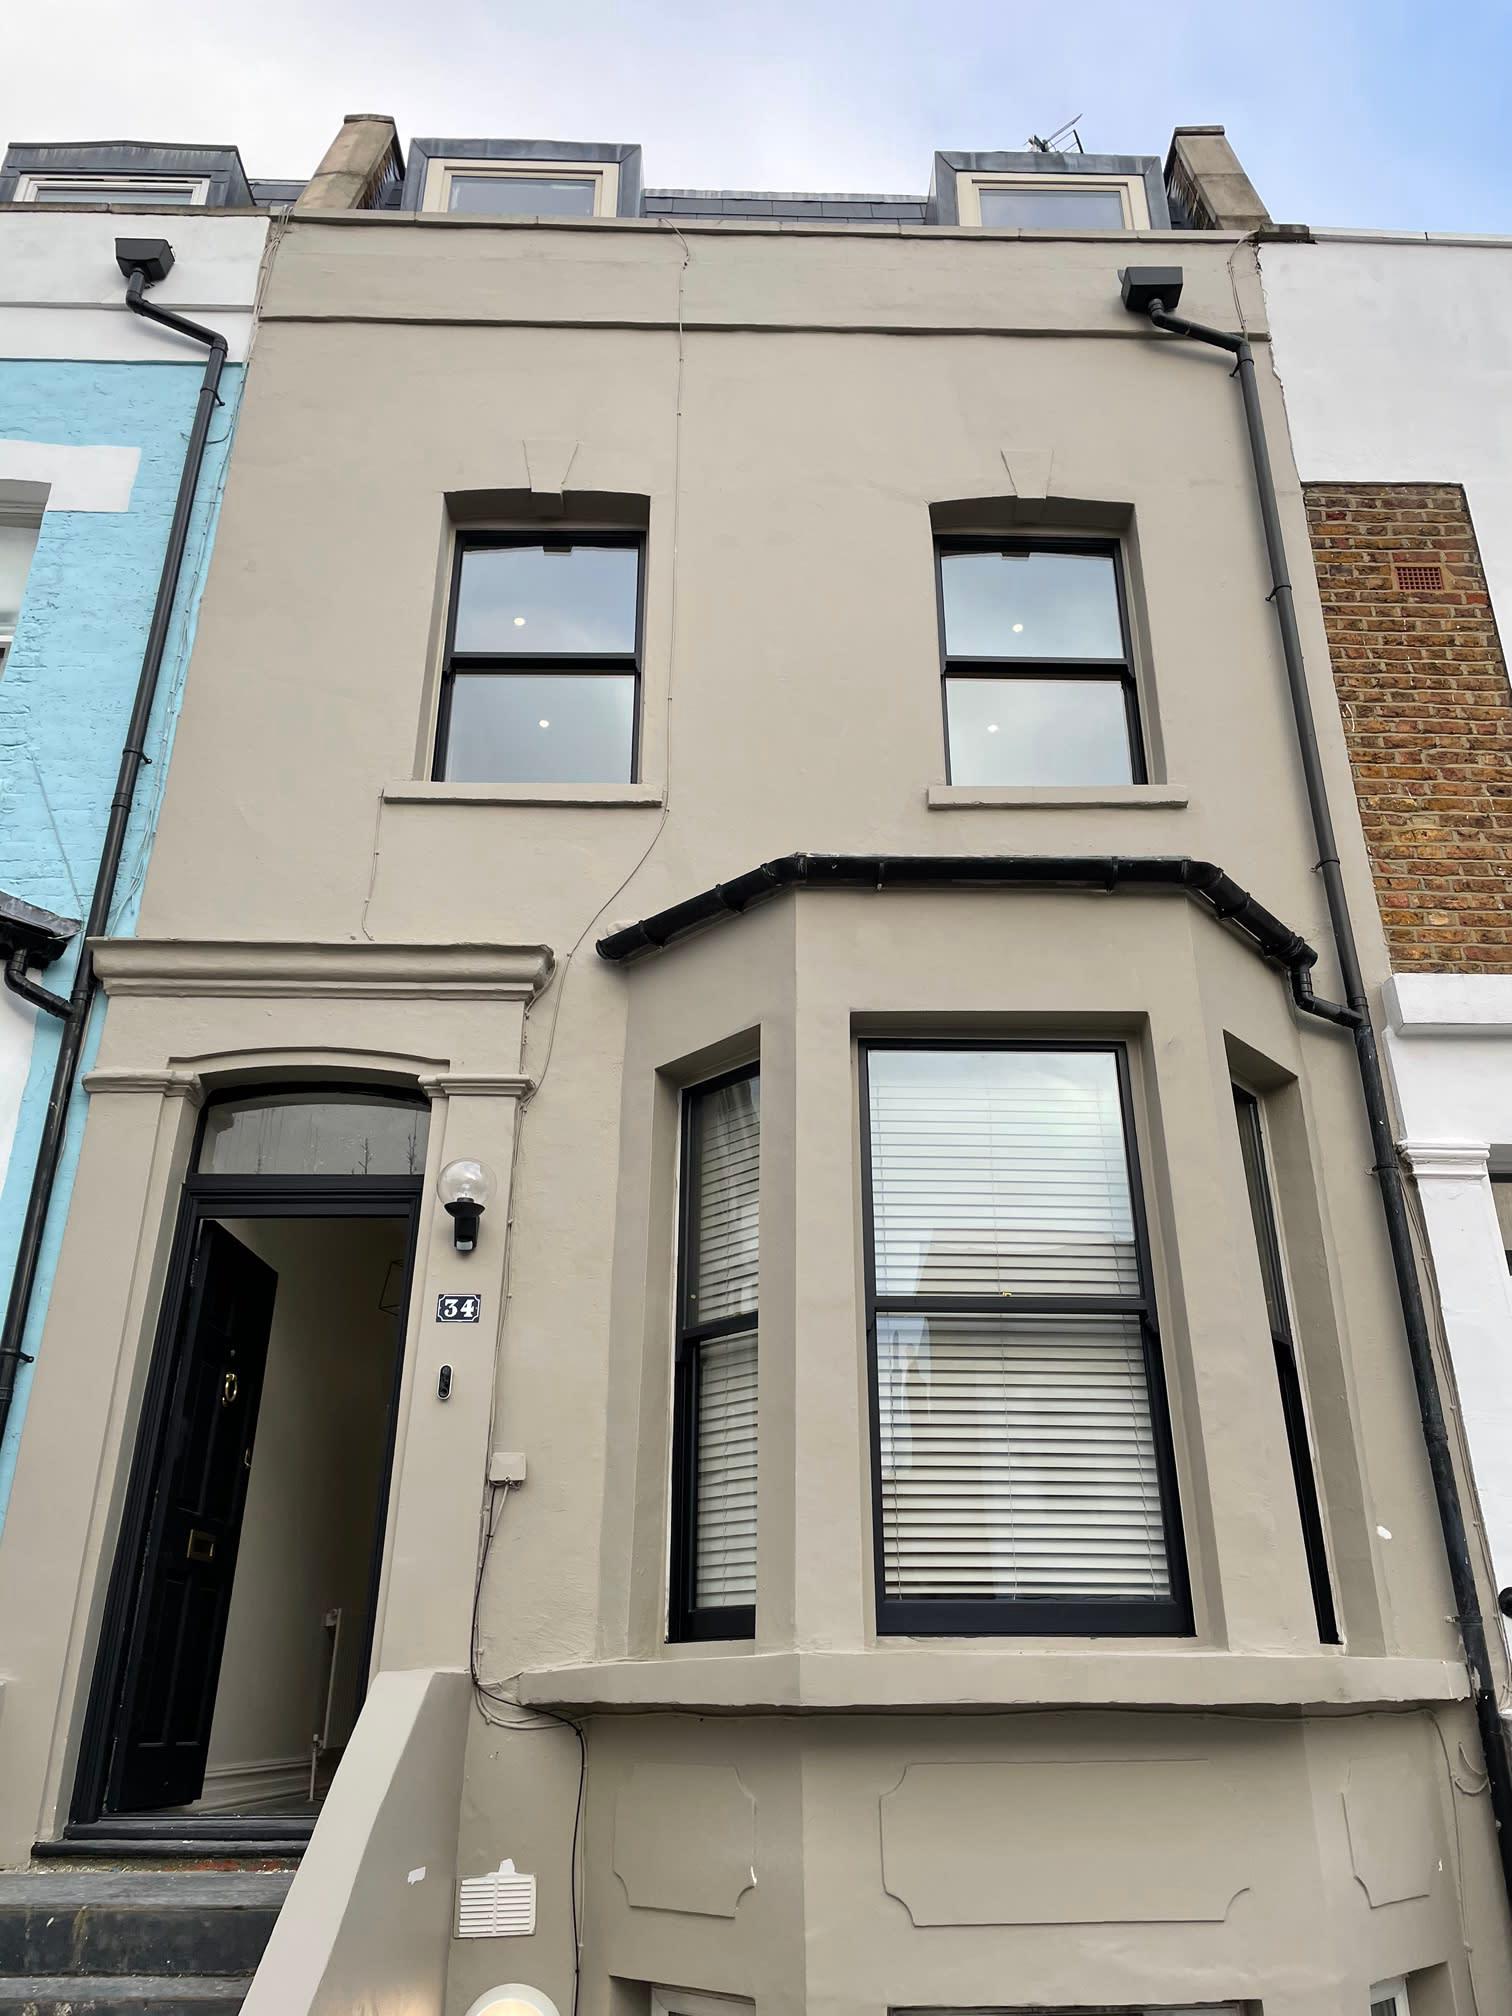 Images London Sash Windows & Doors Ltd